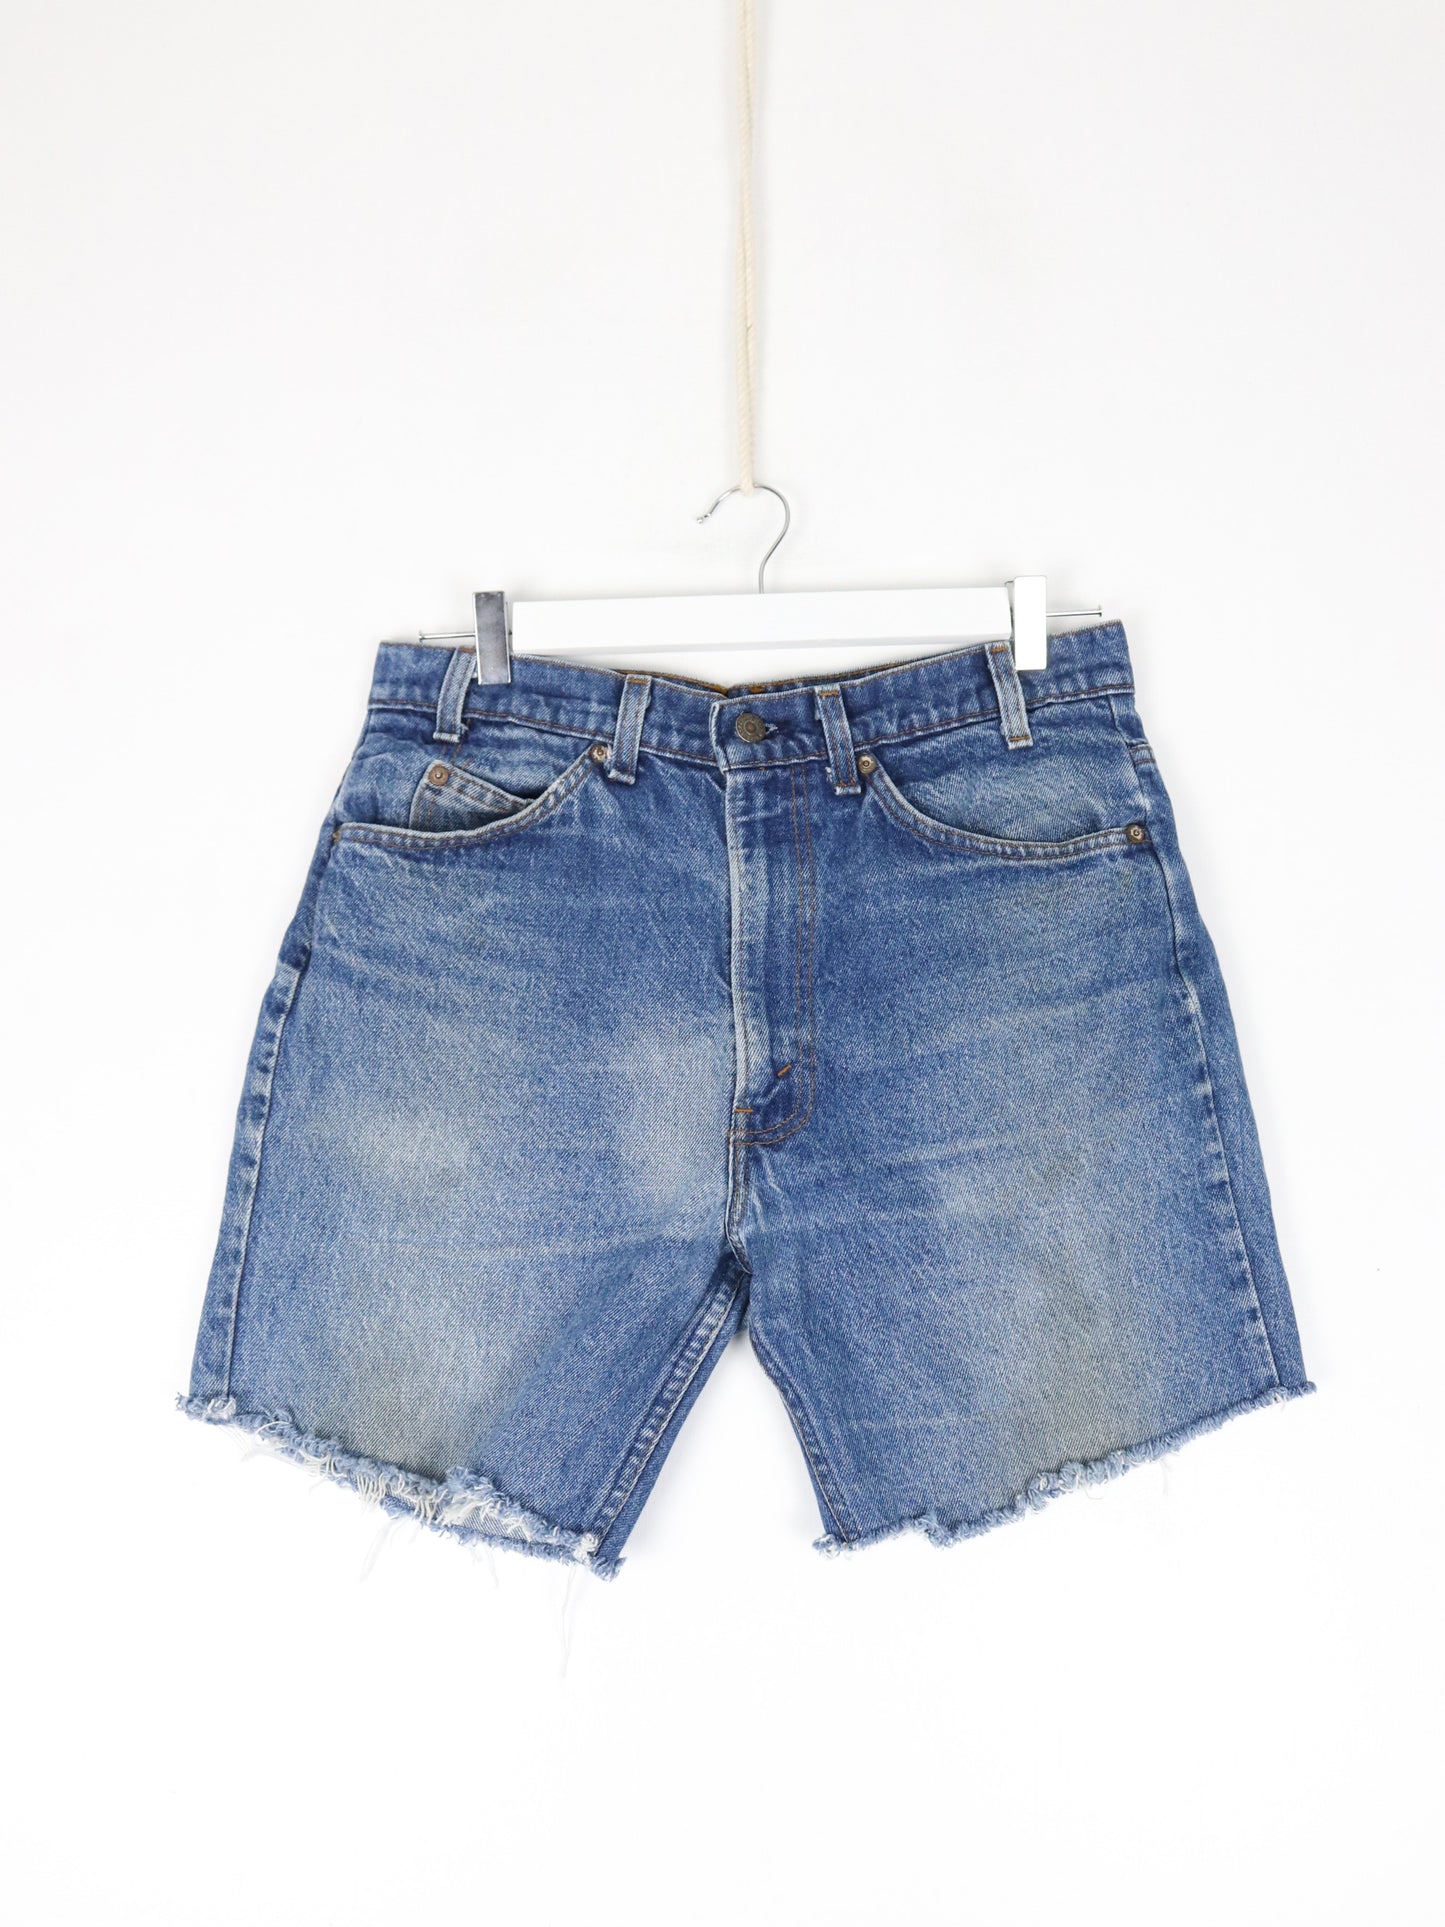 Vintage Levi's Shorts Mens 30 Blue Denim Jorts Cut Off